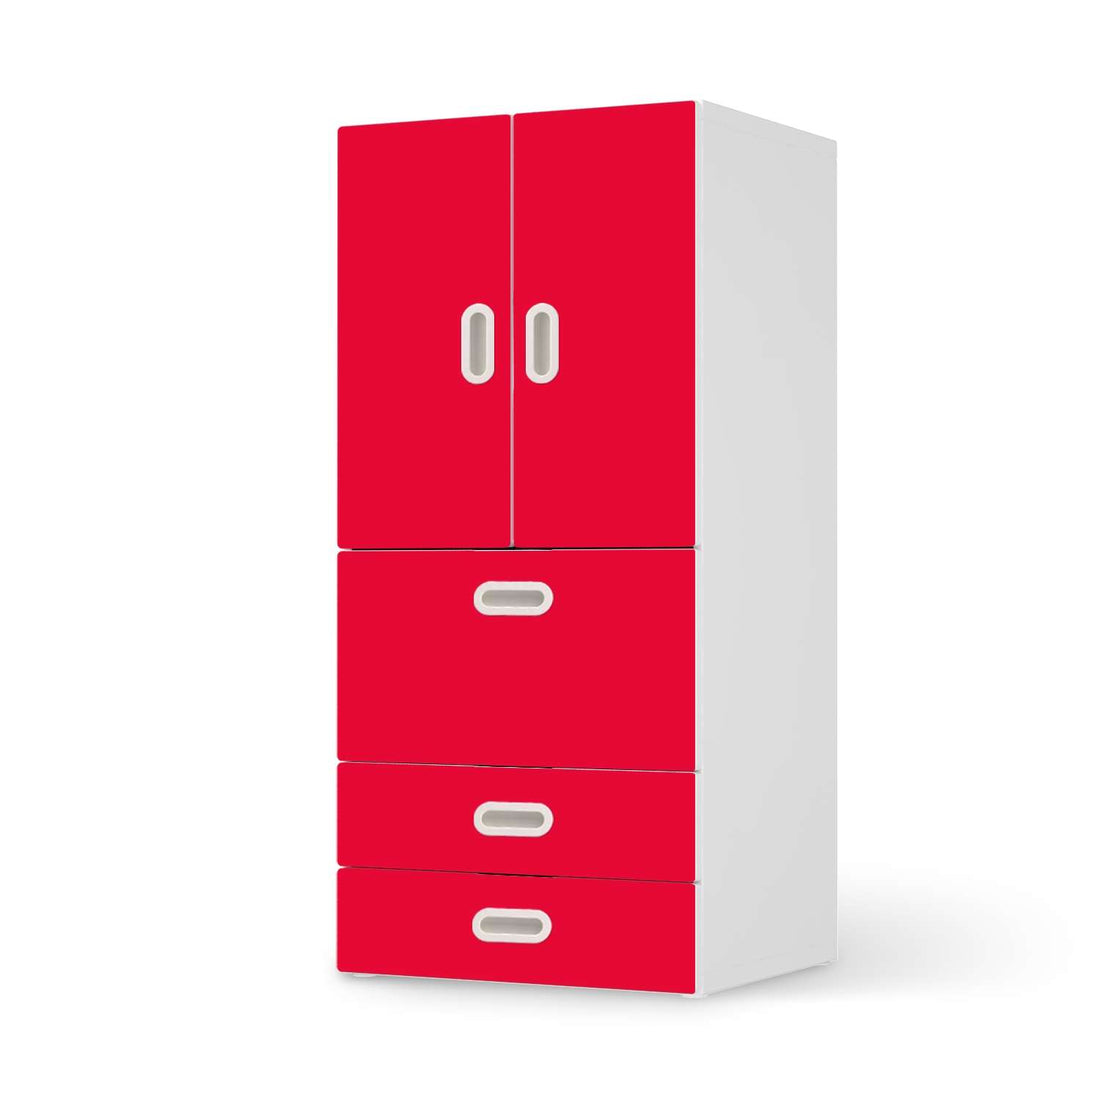 Möbelfolie Rot Light - IKEA Stuva / Fritids kombiniert - 3 Schubladen und 2 kleine Türen  - weiss